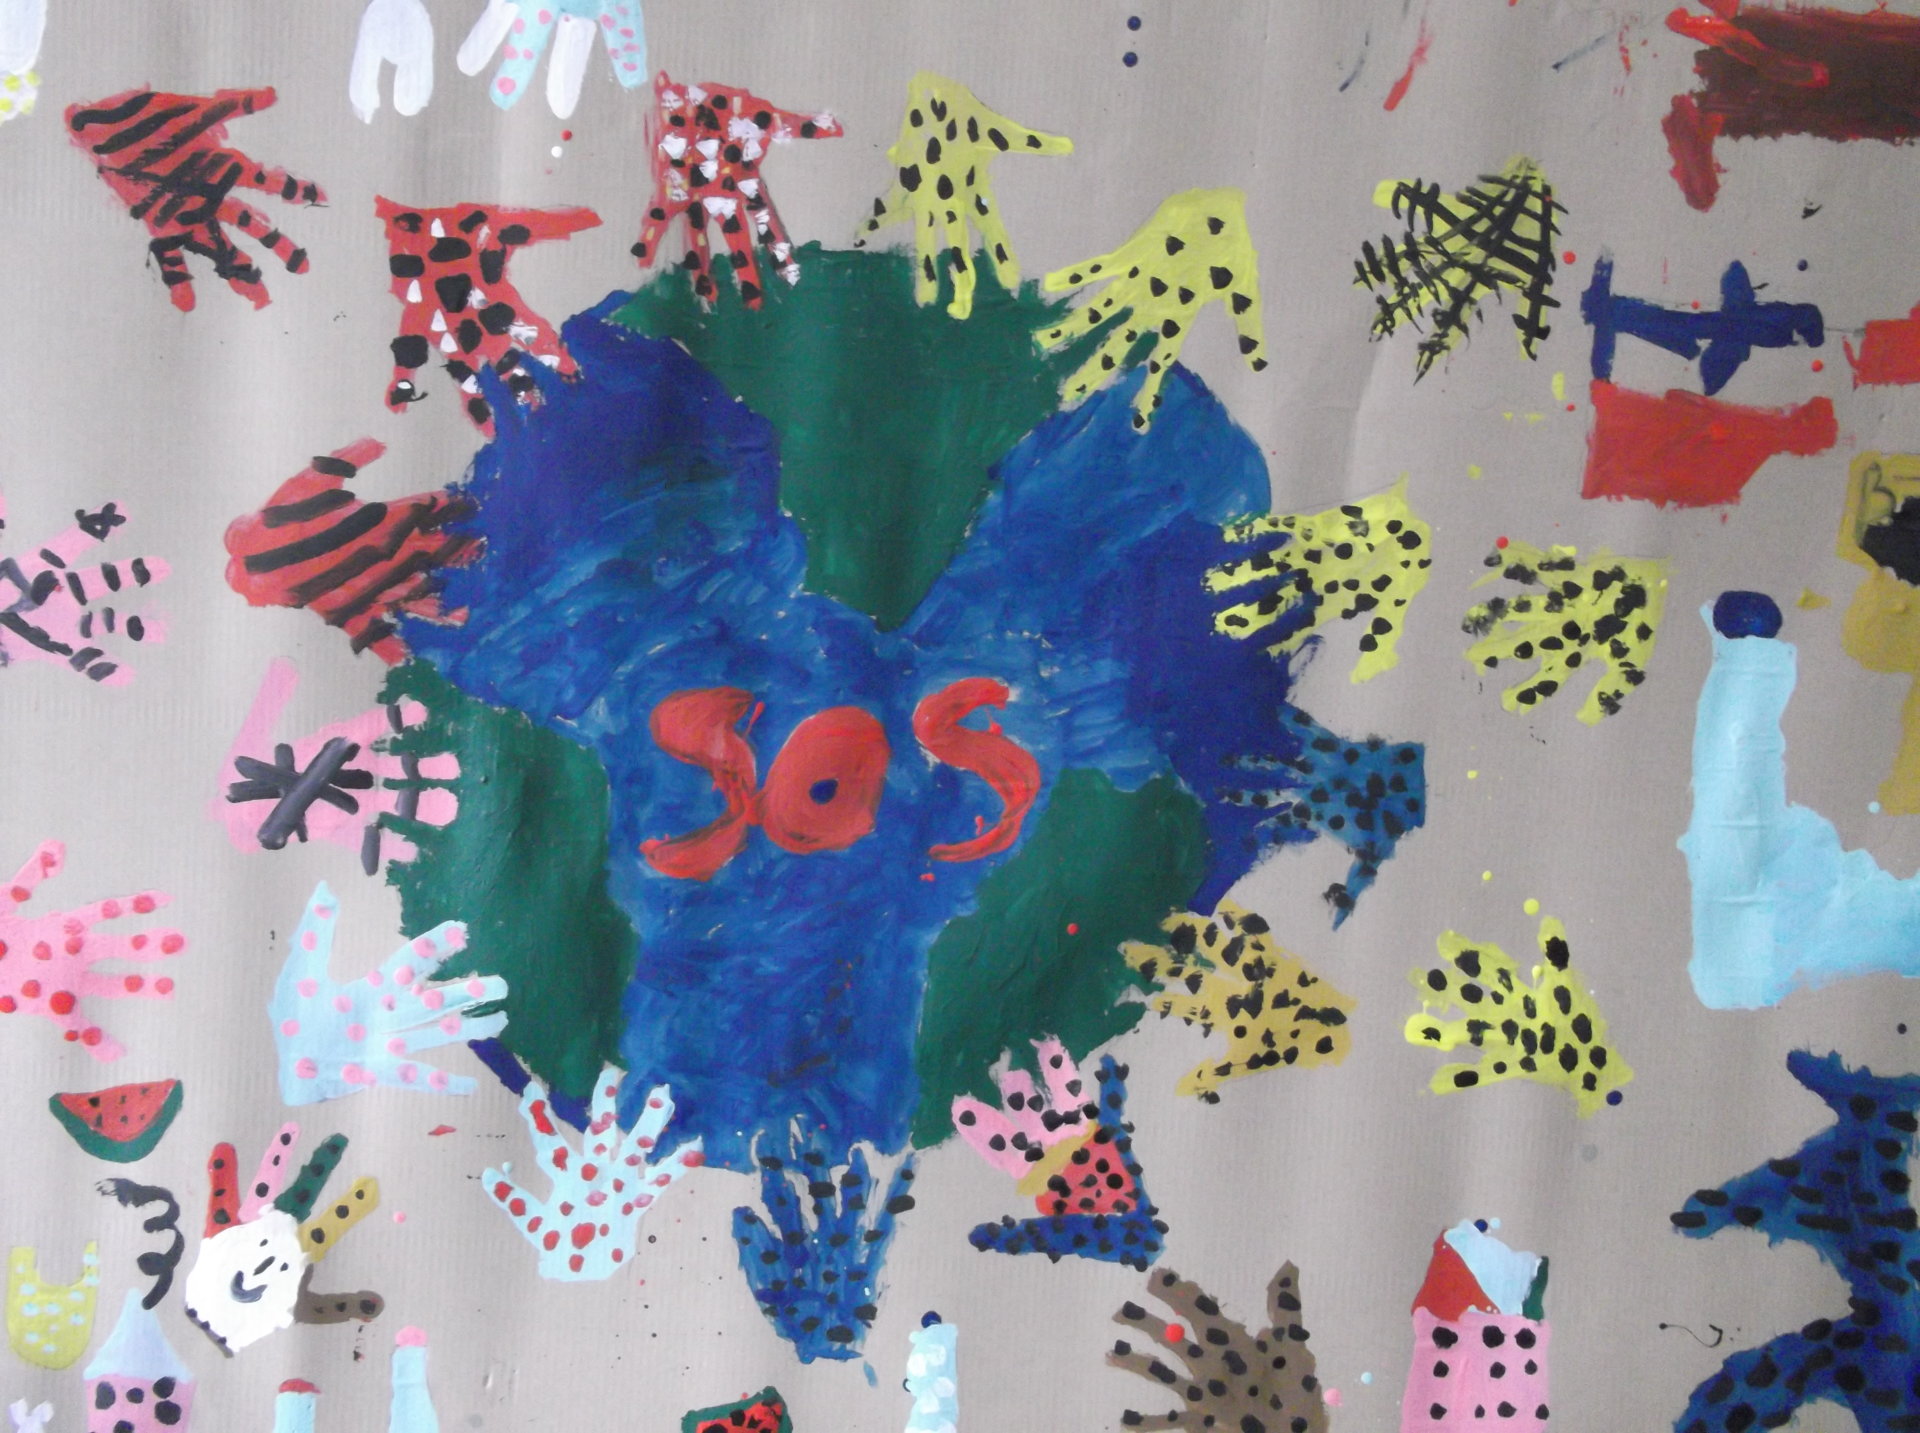 Let’s bring environmental awareness in schools!